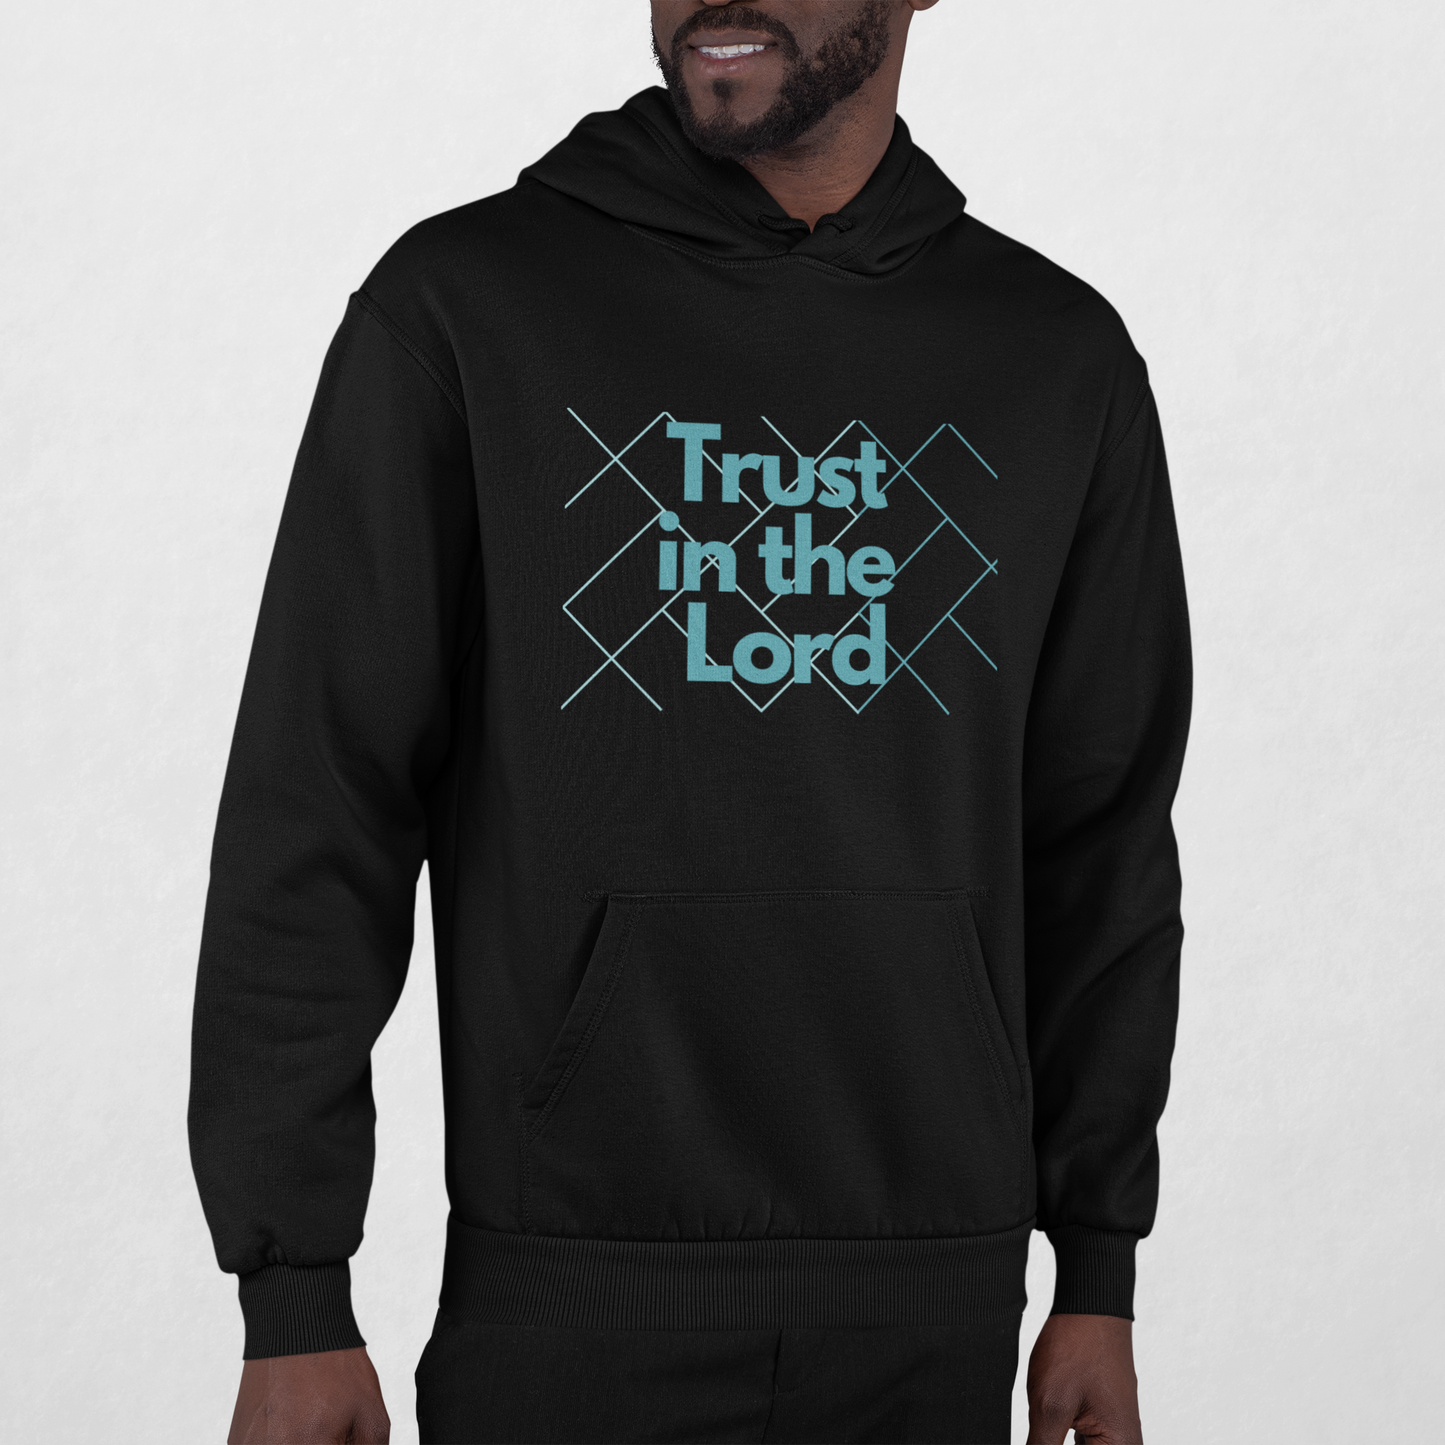 Trust - Men's Christian Hooded Sweatshirt